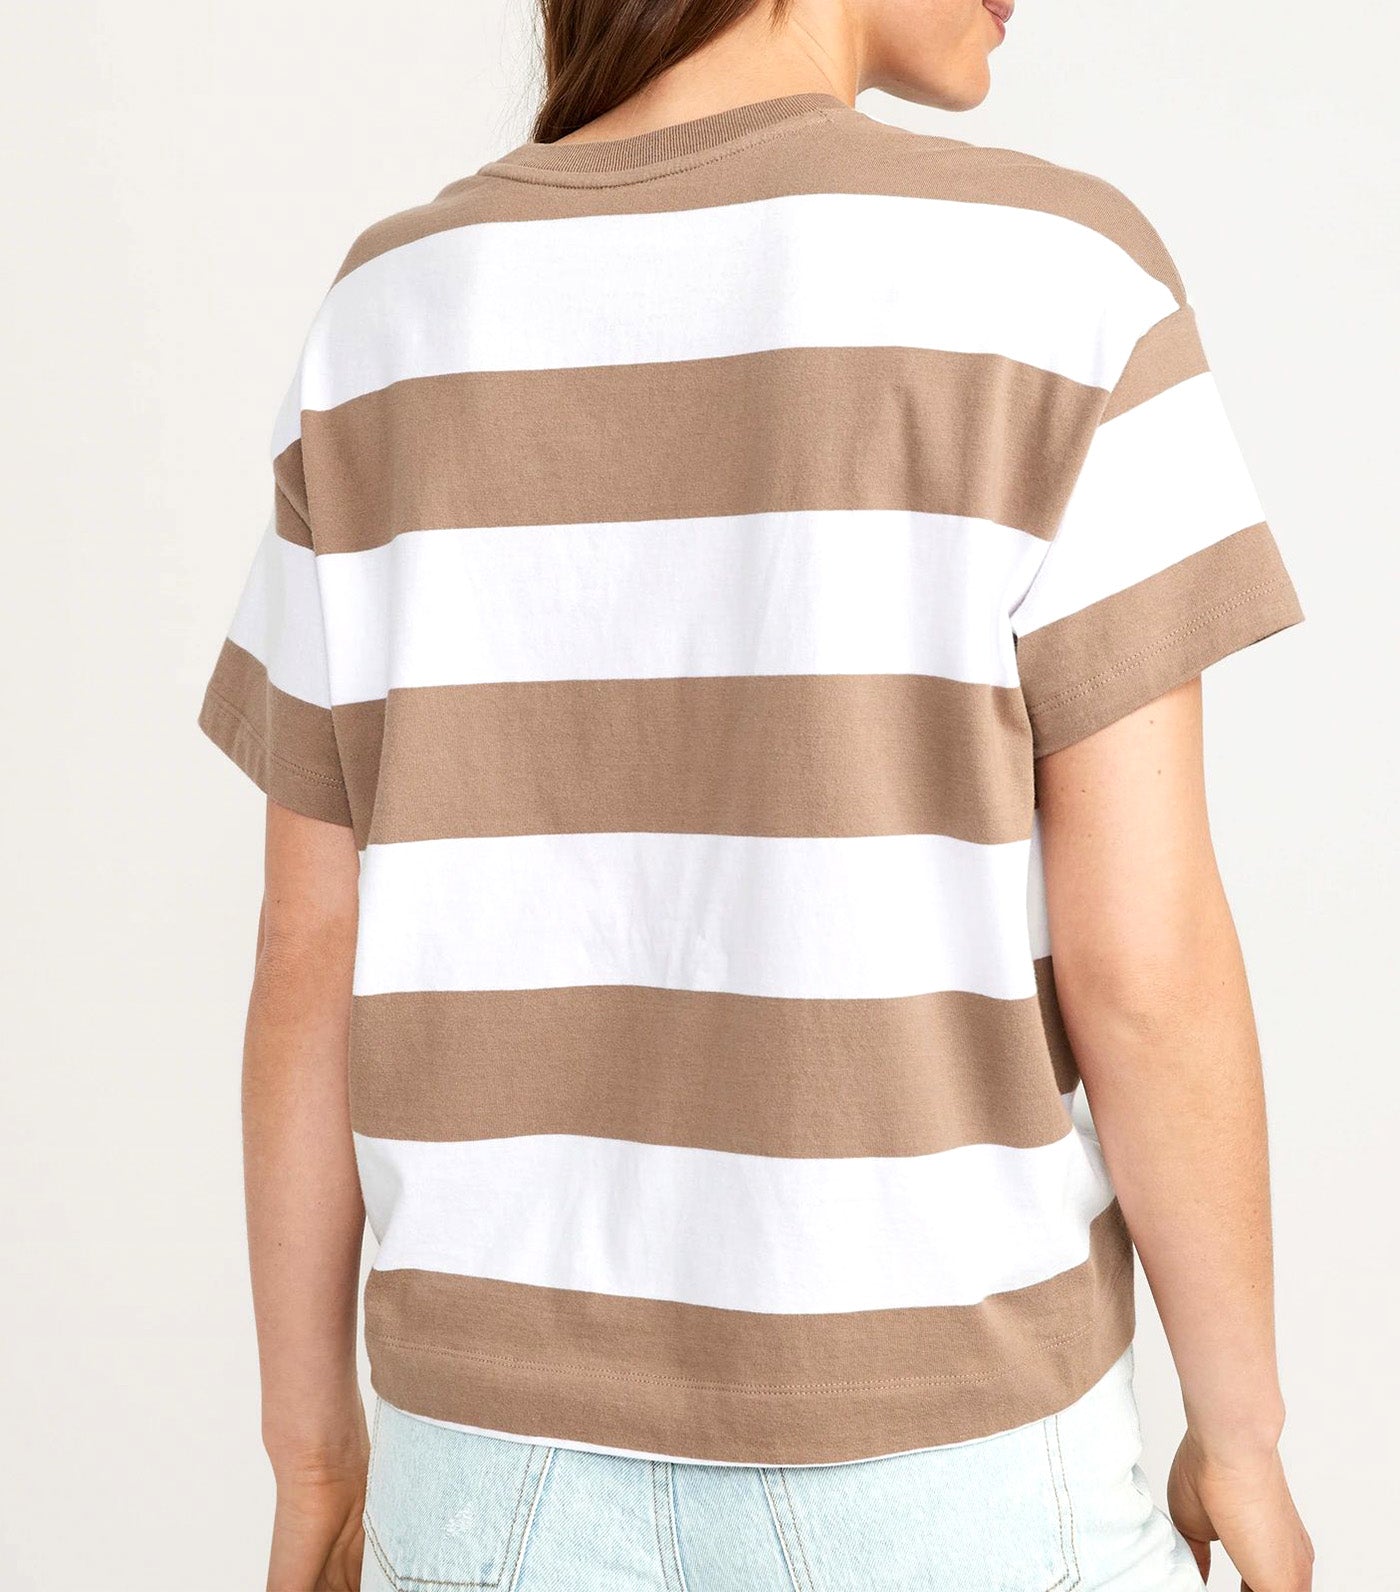 Vintage Striped T-Shirt for Women Earth Brown Stripe